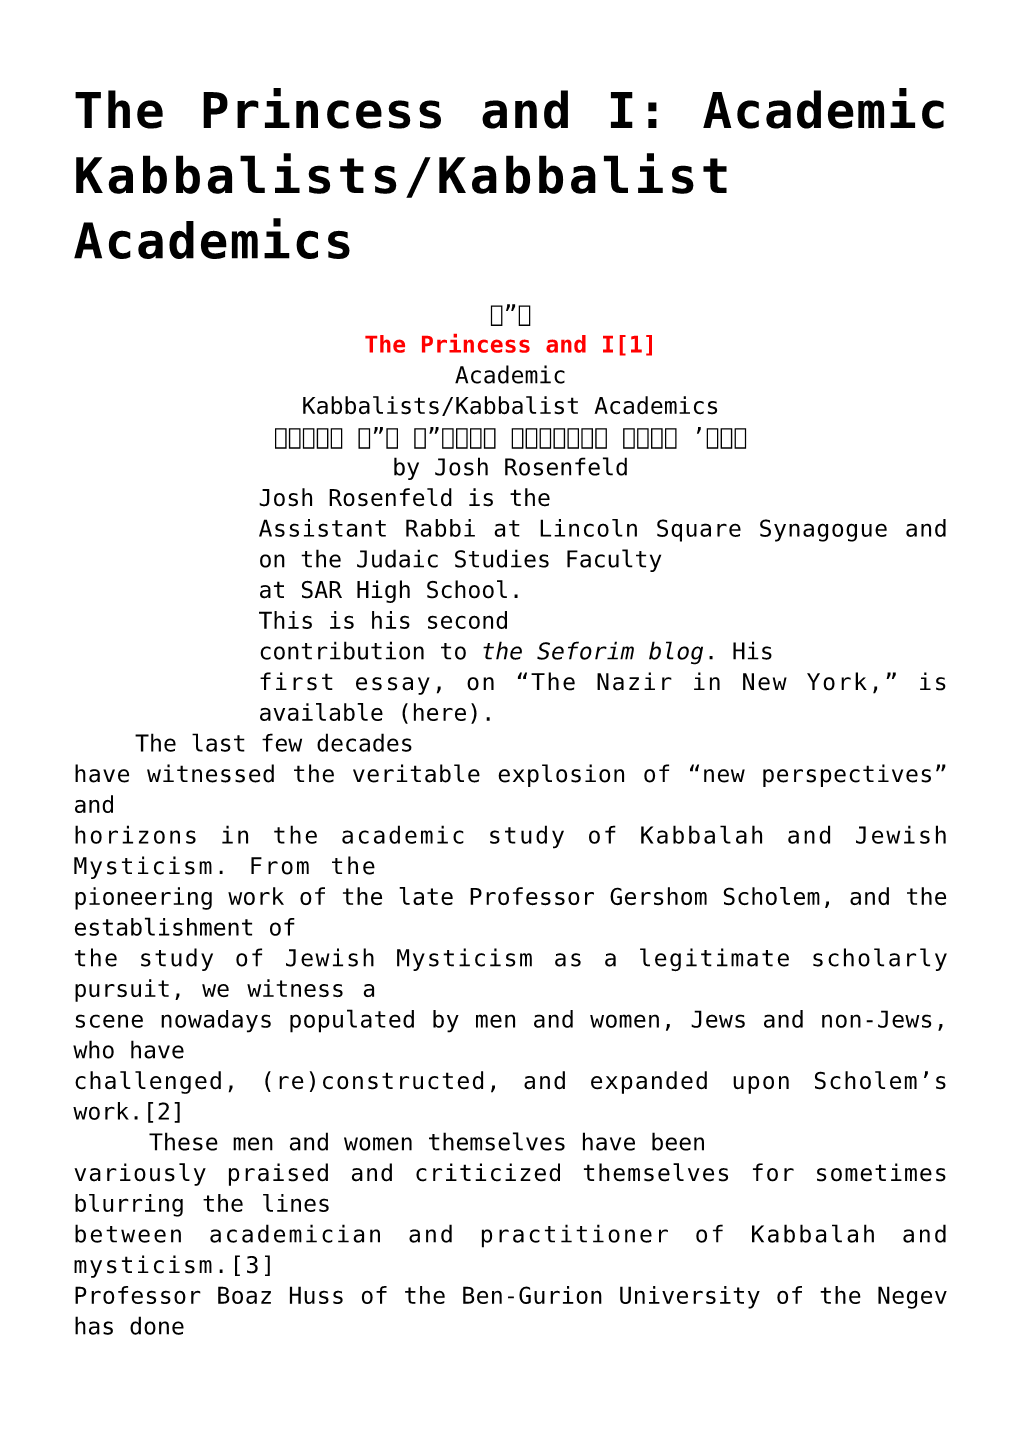 The Princess and I: Academic Kabbalists/Kabbalist Academics